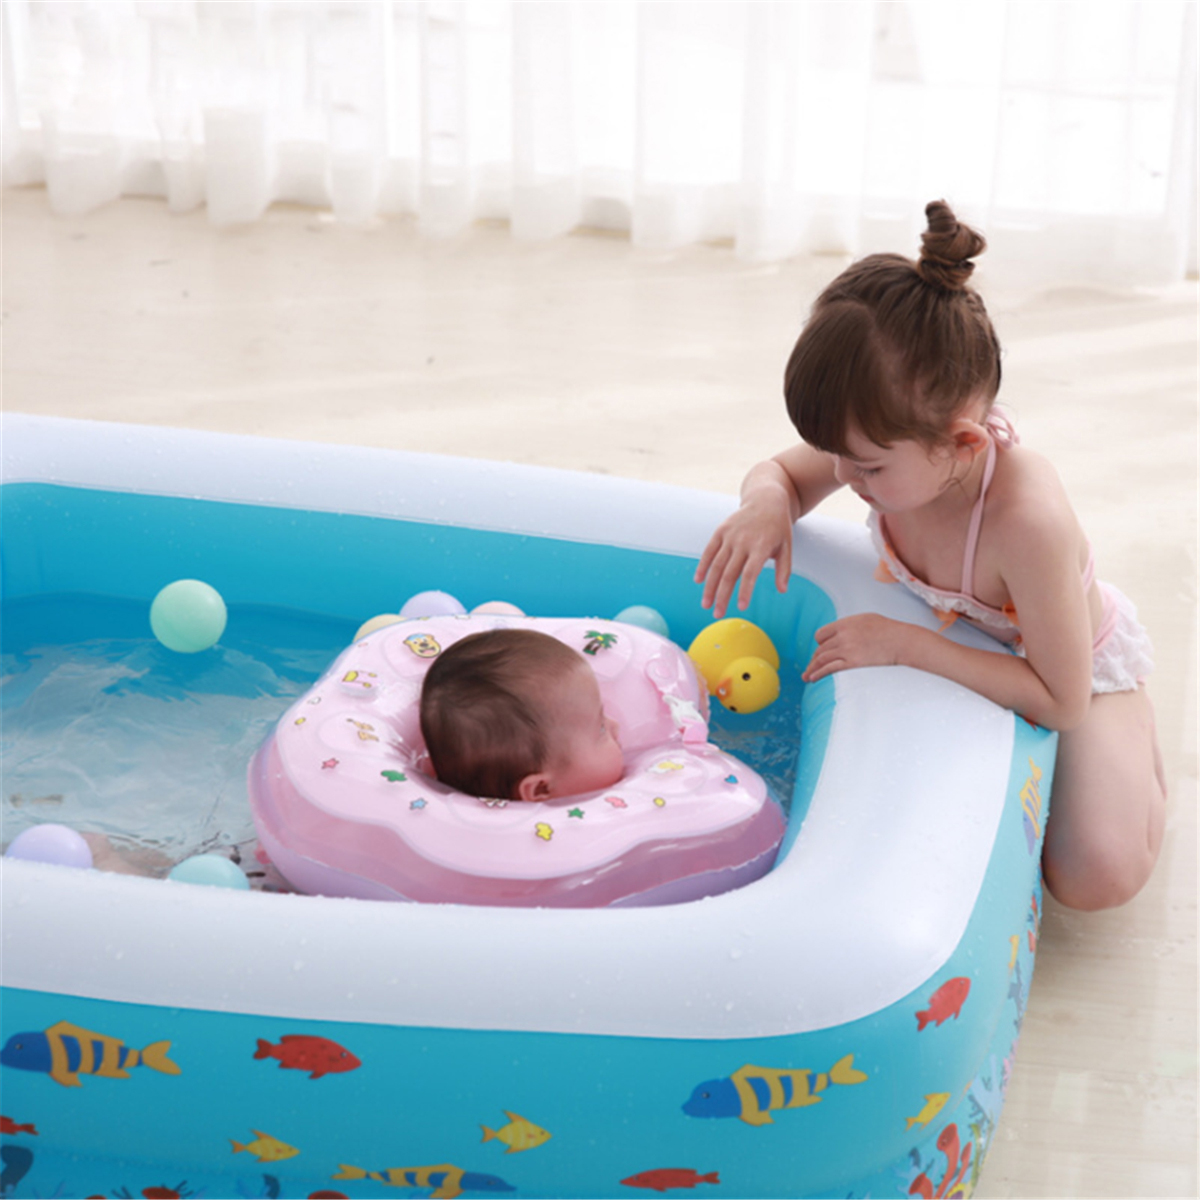 453x338x138-Inflatable-Swimming-Pool-Family-Play-Center-Swim-Baby-Kids-Child-Backyard-Garden-1551978-5